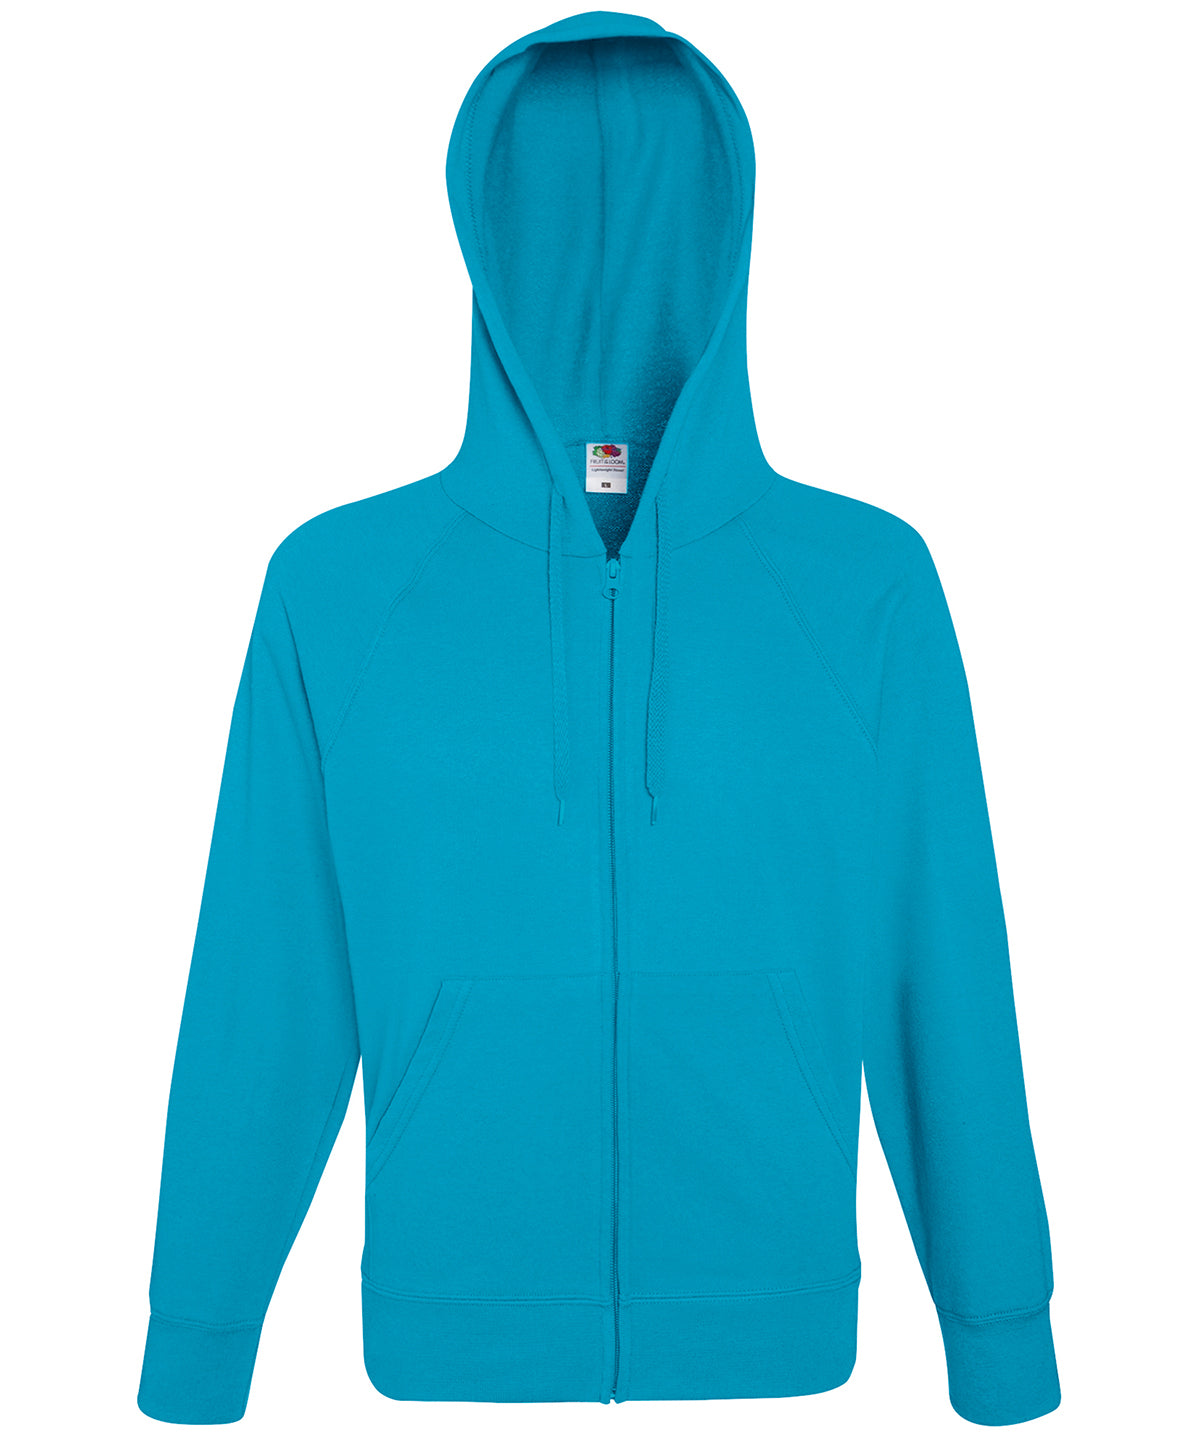 Hettupeysur - Lightweight Hooded Sweatshirt Jacket